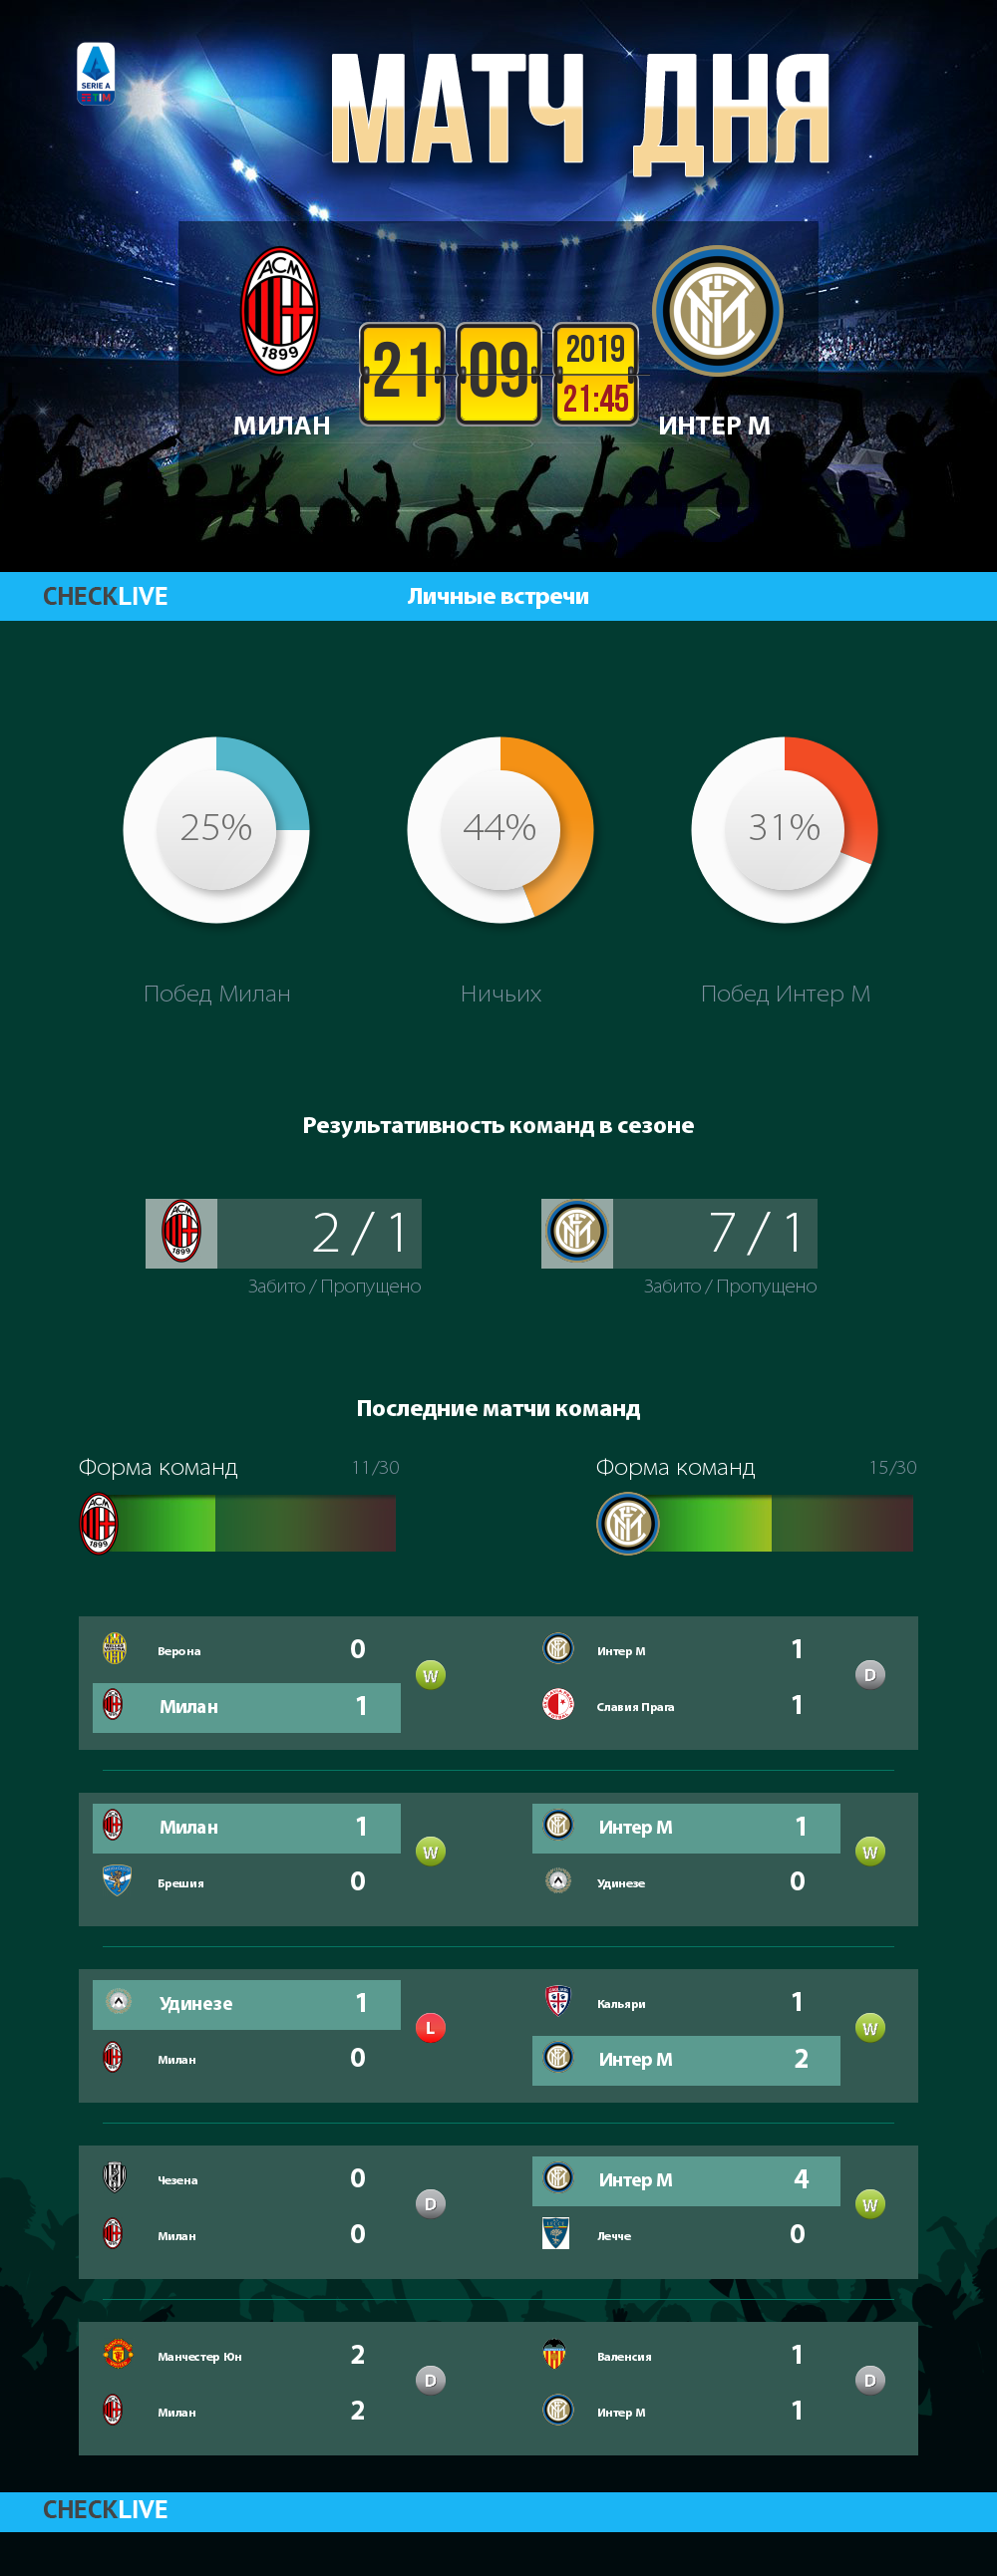 Инфографика Милан и Интер М матч дня 21.09.2019